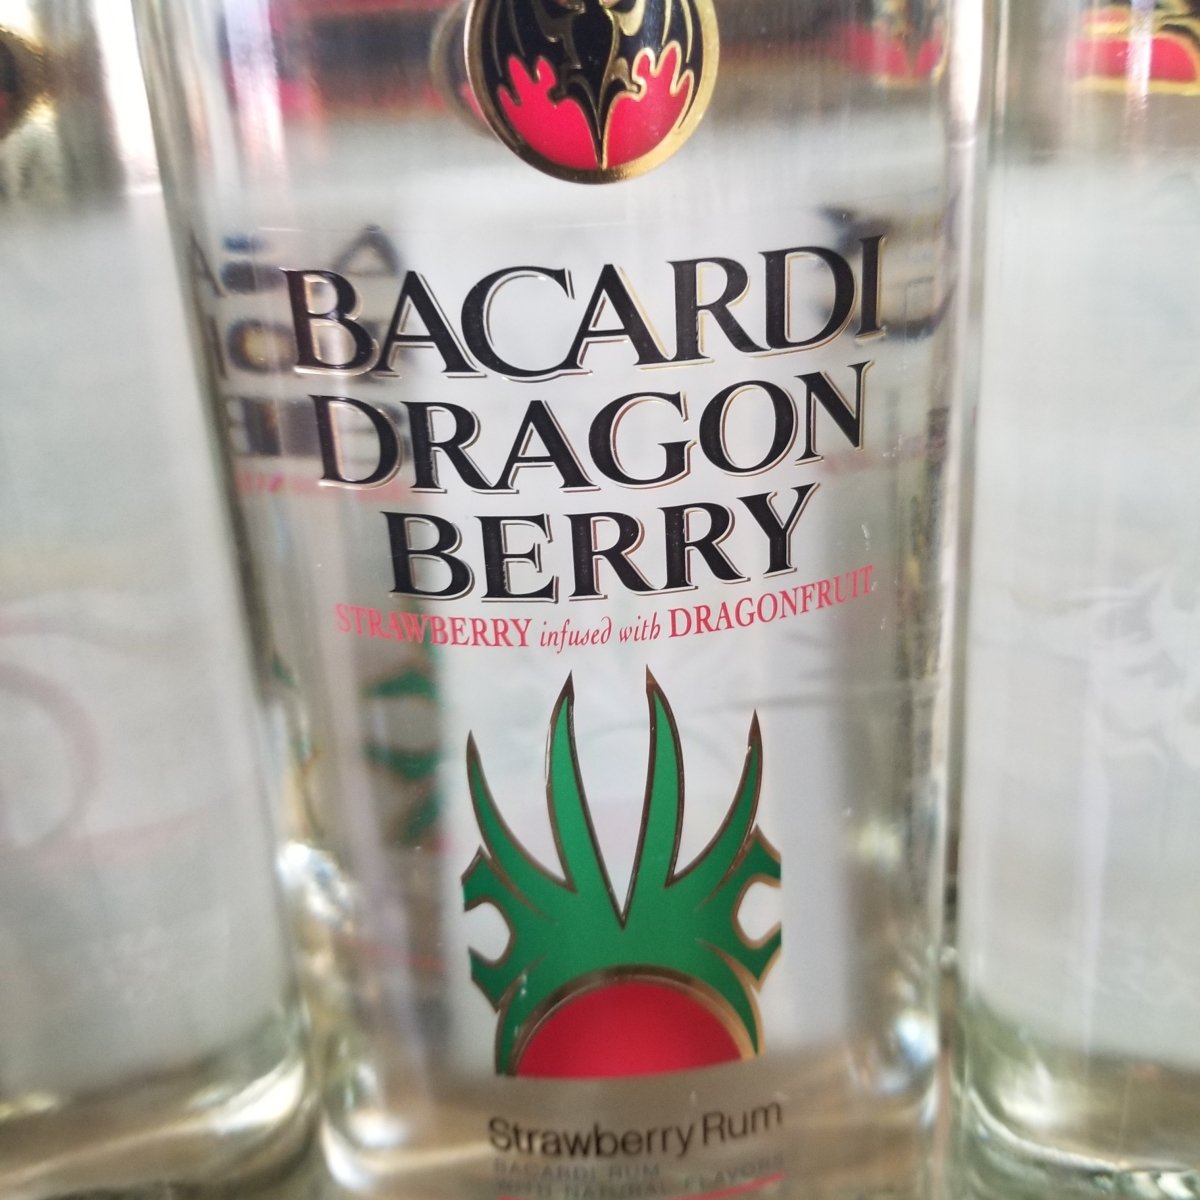 Bacardi Dragon Berry Rum 375ml - Sip & Say